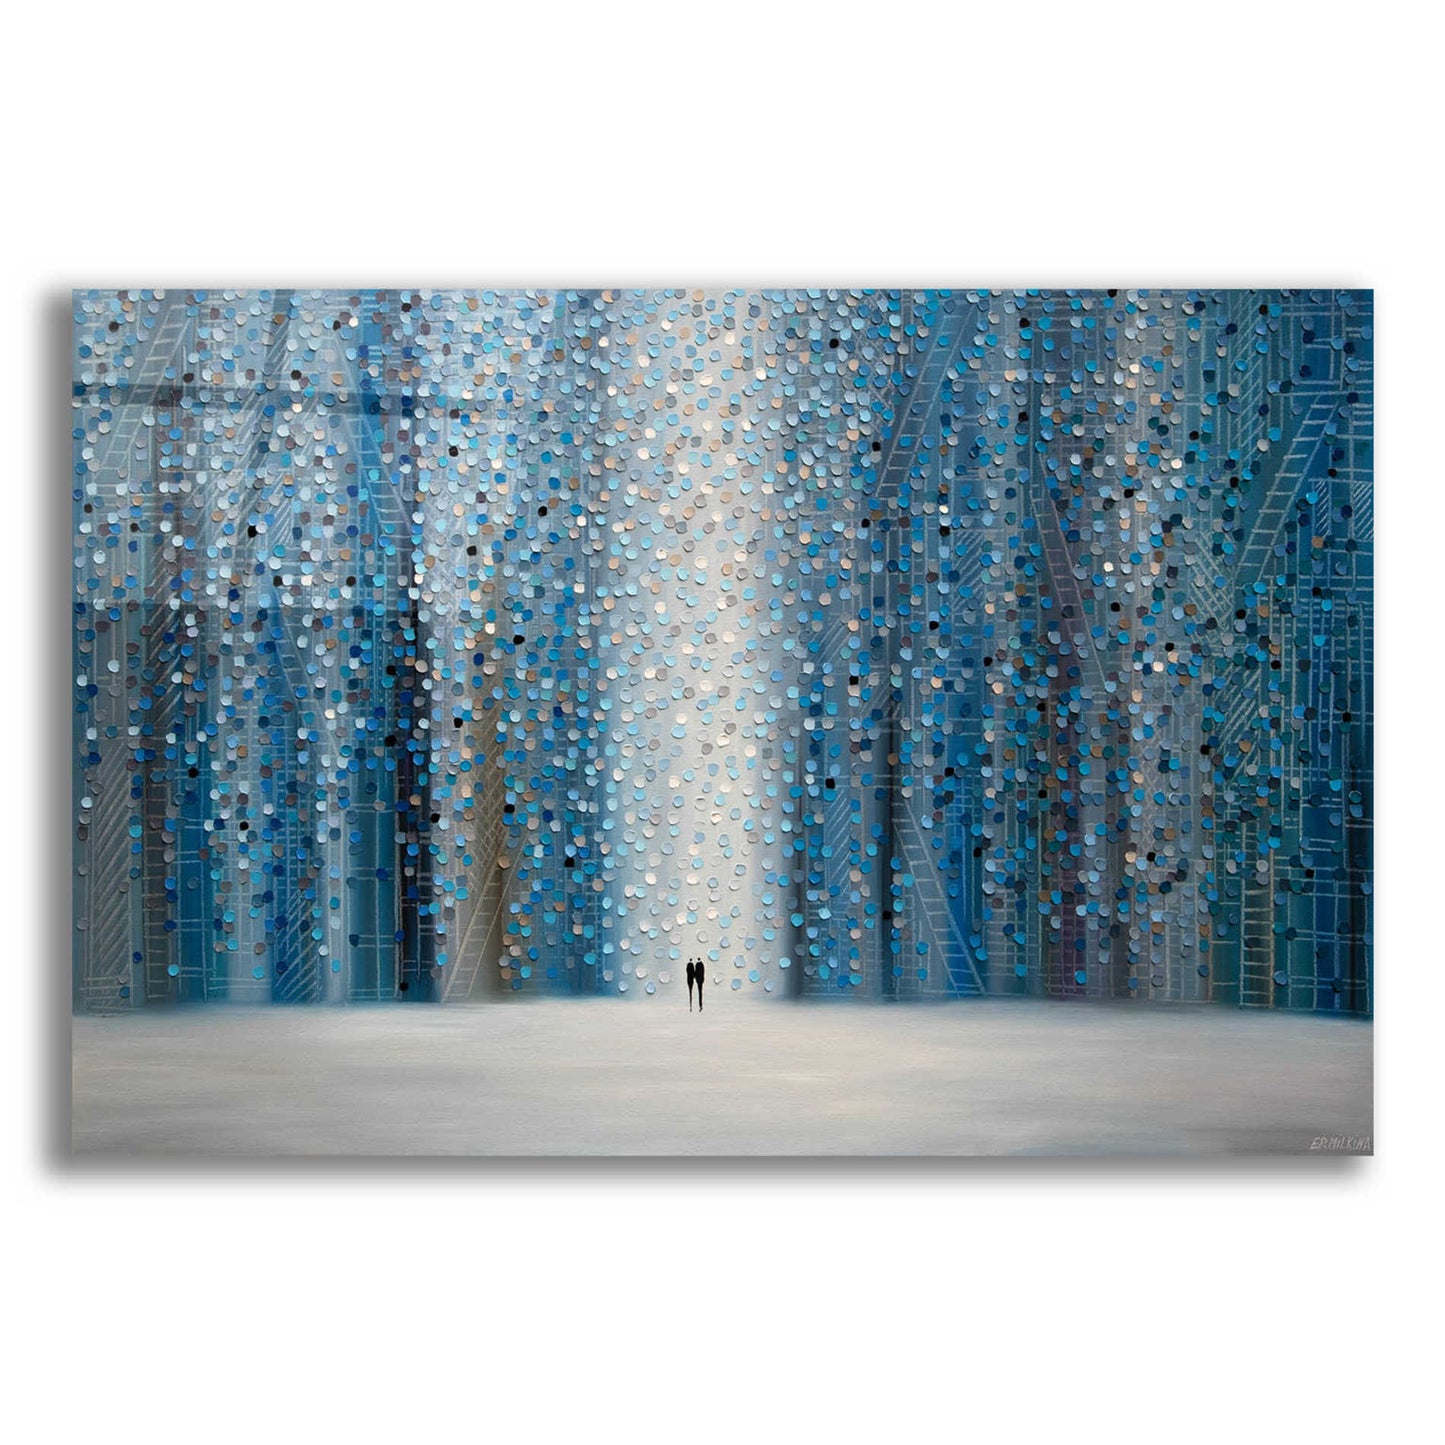 Epic Art 'Sounds Of The Rain' by Ekaterina Ermilkina Acrylic Glass Wall Art,16x12